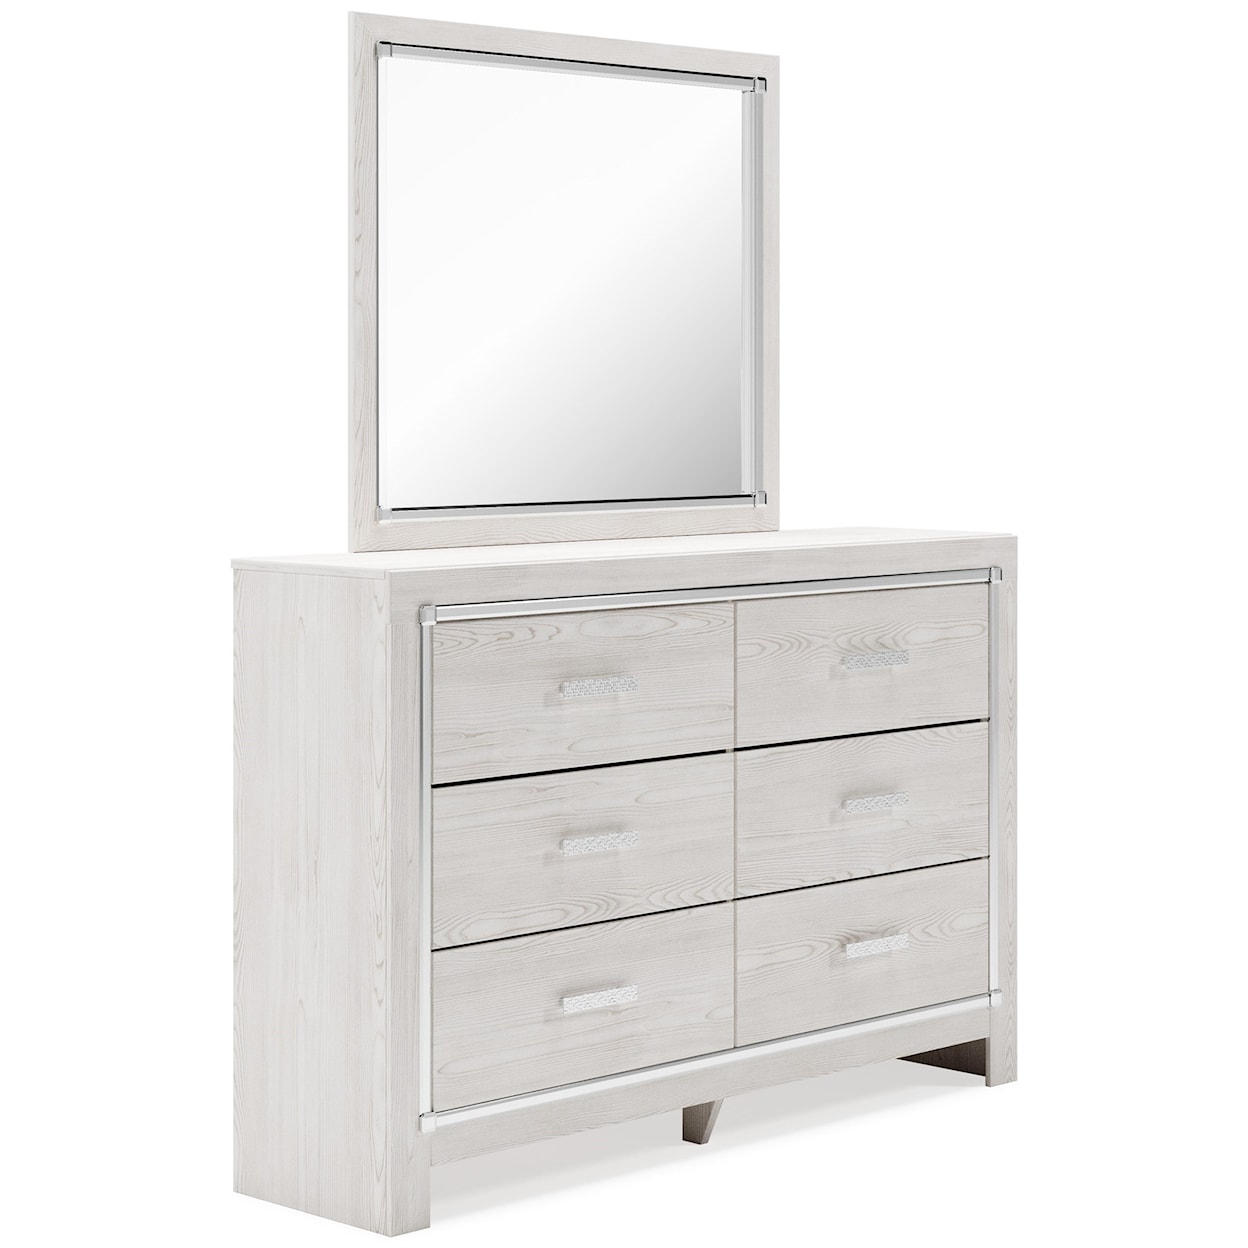 Benchcraft Altyra Dresser & Bedroom Mirror